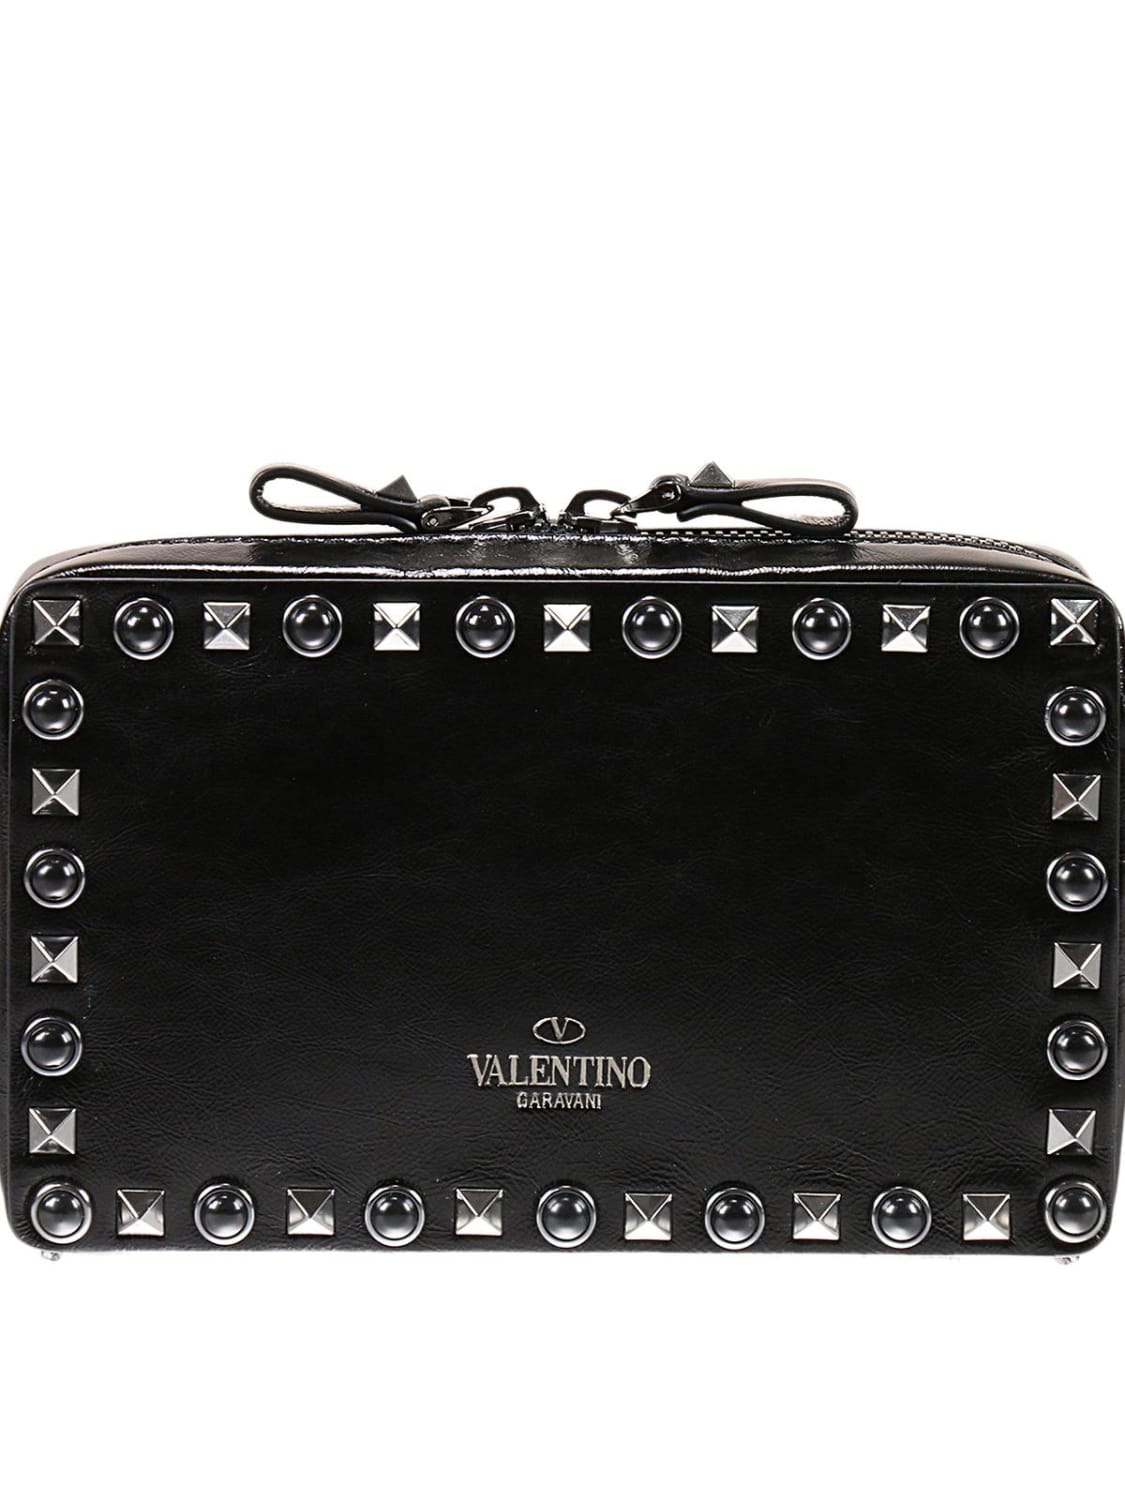 GARAVANI: Guitar rockstud rolling noir satchel with studs and stones - Black | Valentino Garavani mini bag LW0B0127 WKU online on GIGLIO.COM